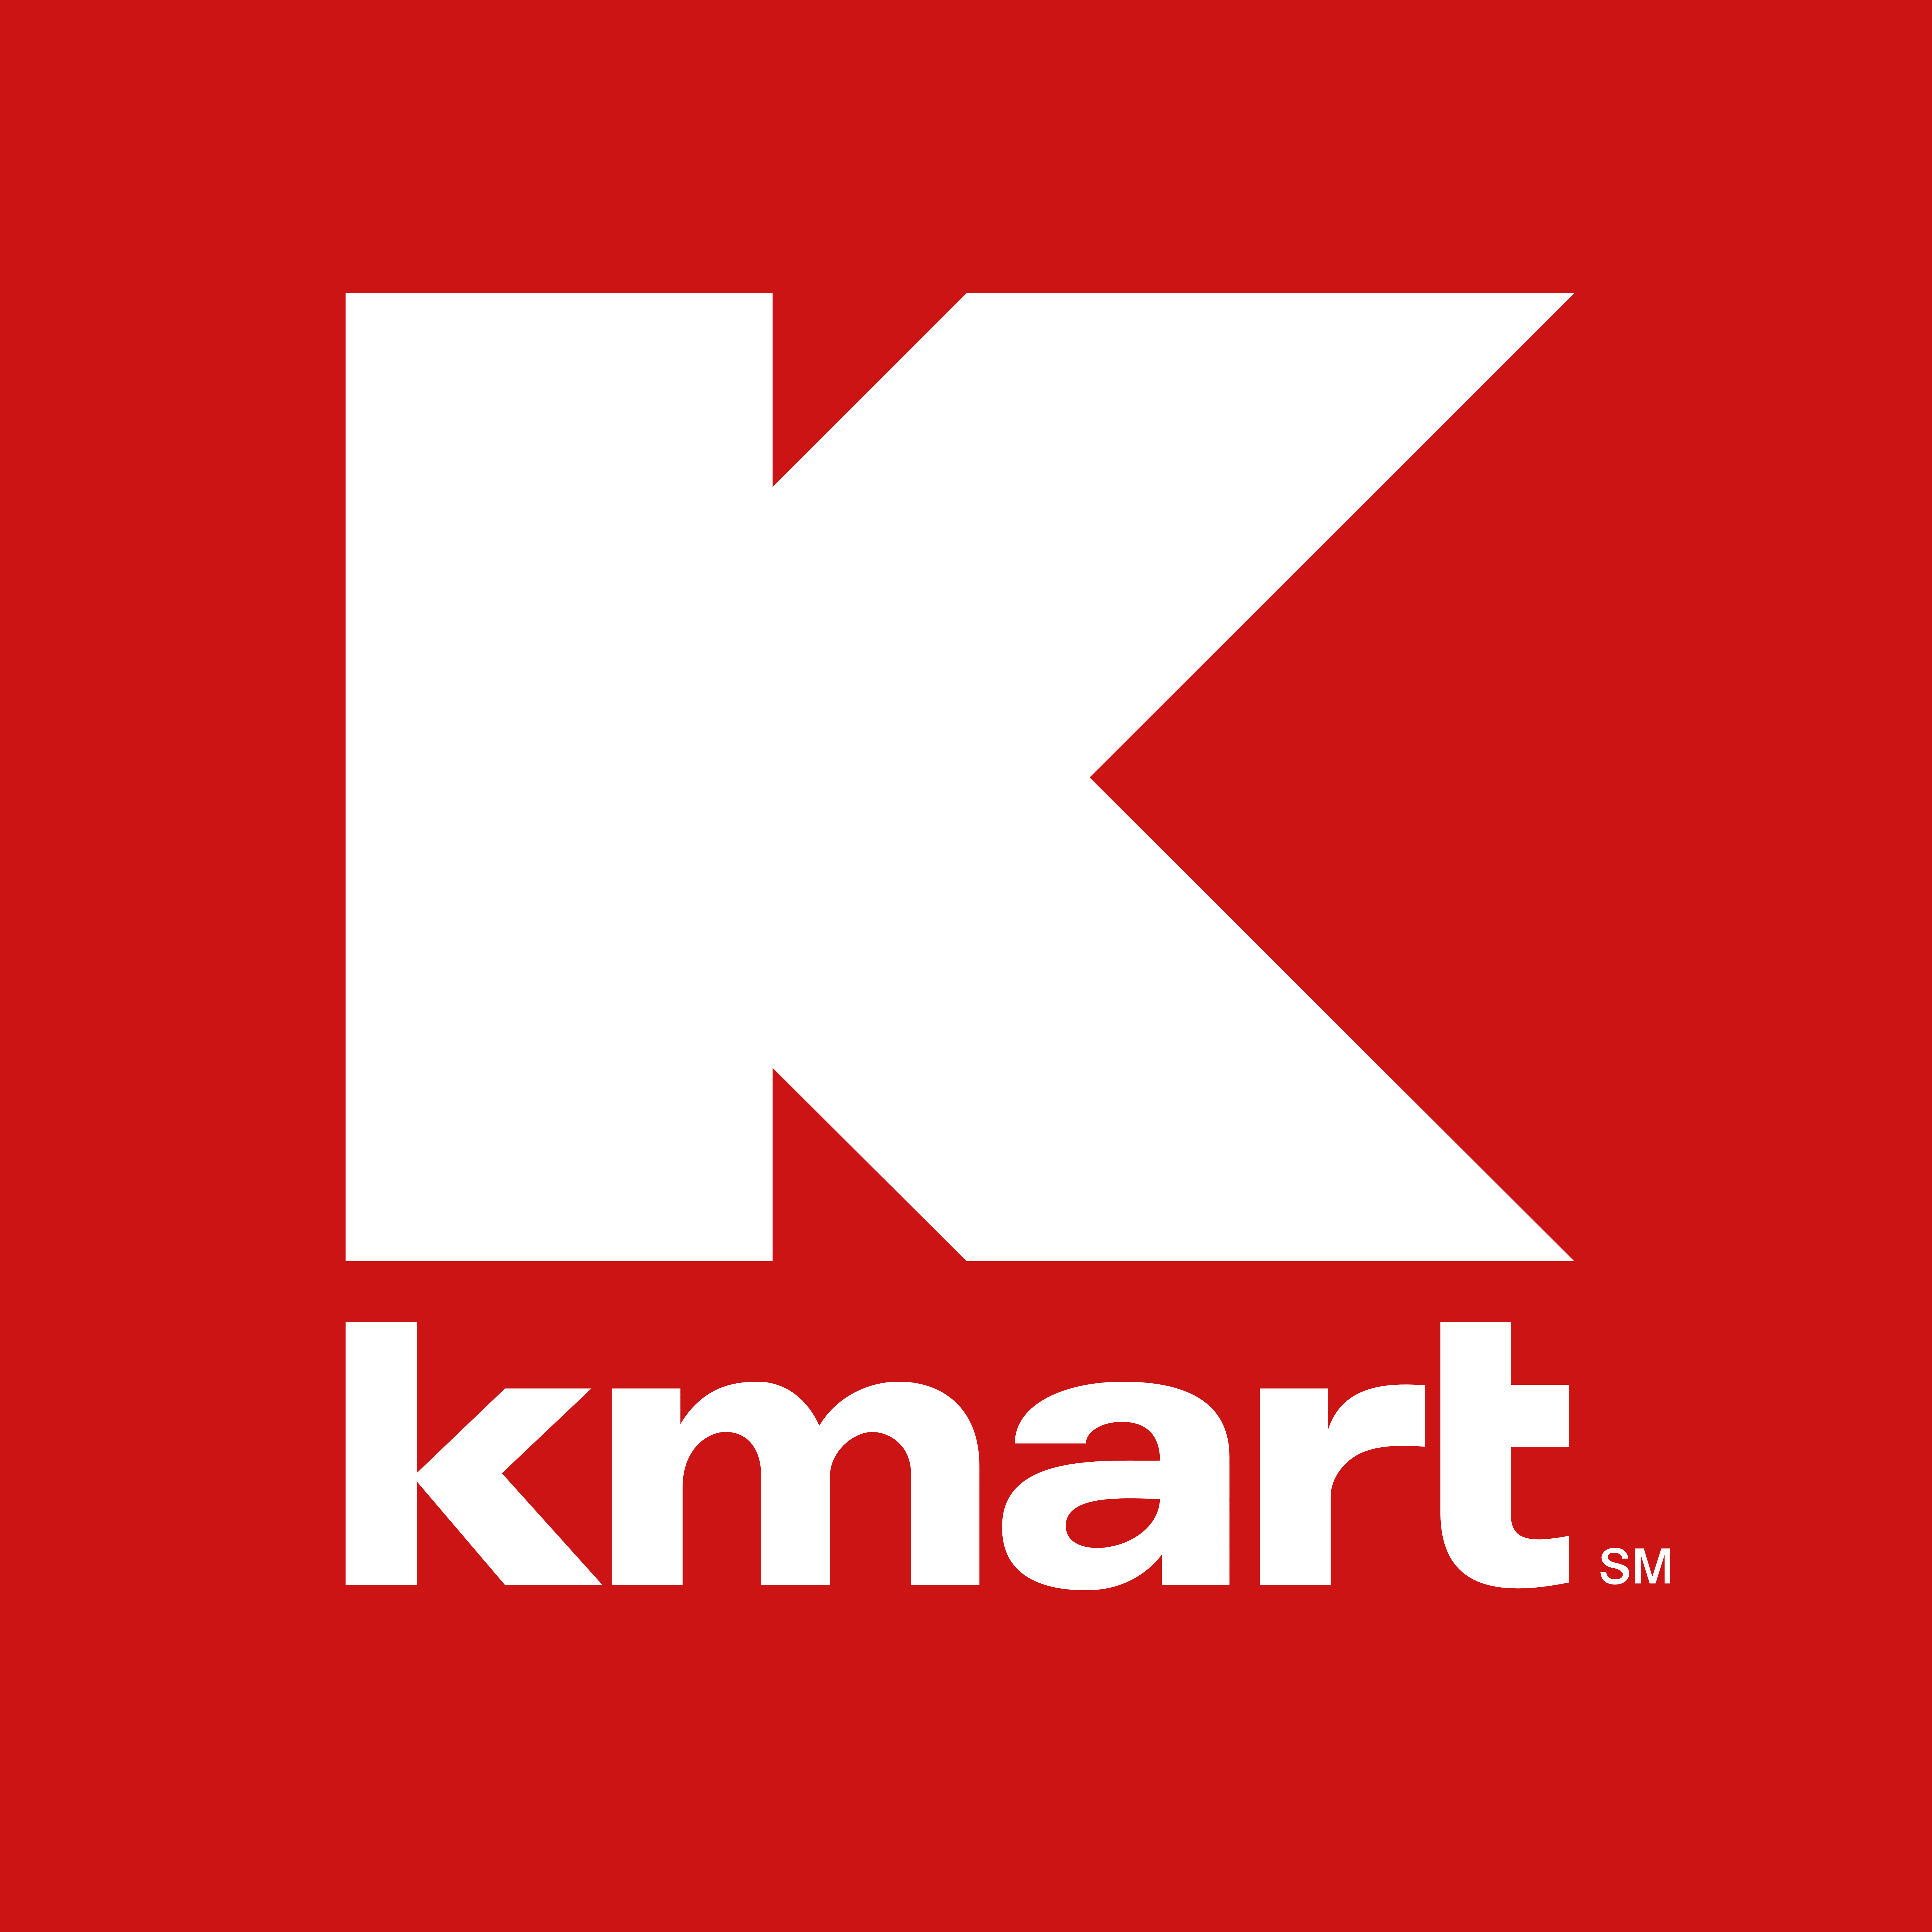 Kmart Logo - Kmart logo, red background – Logos Download